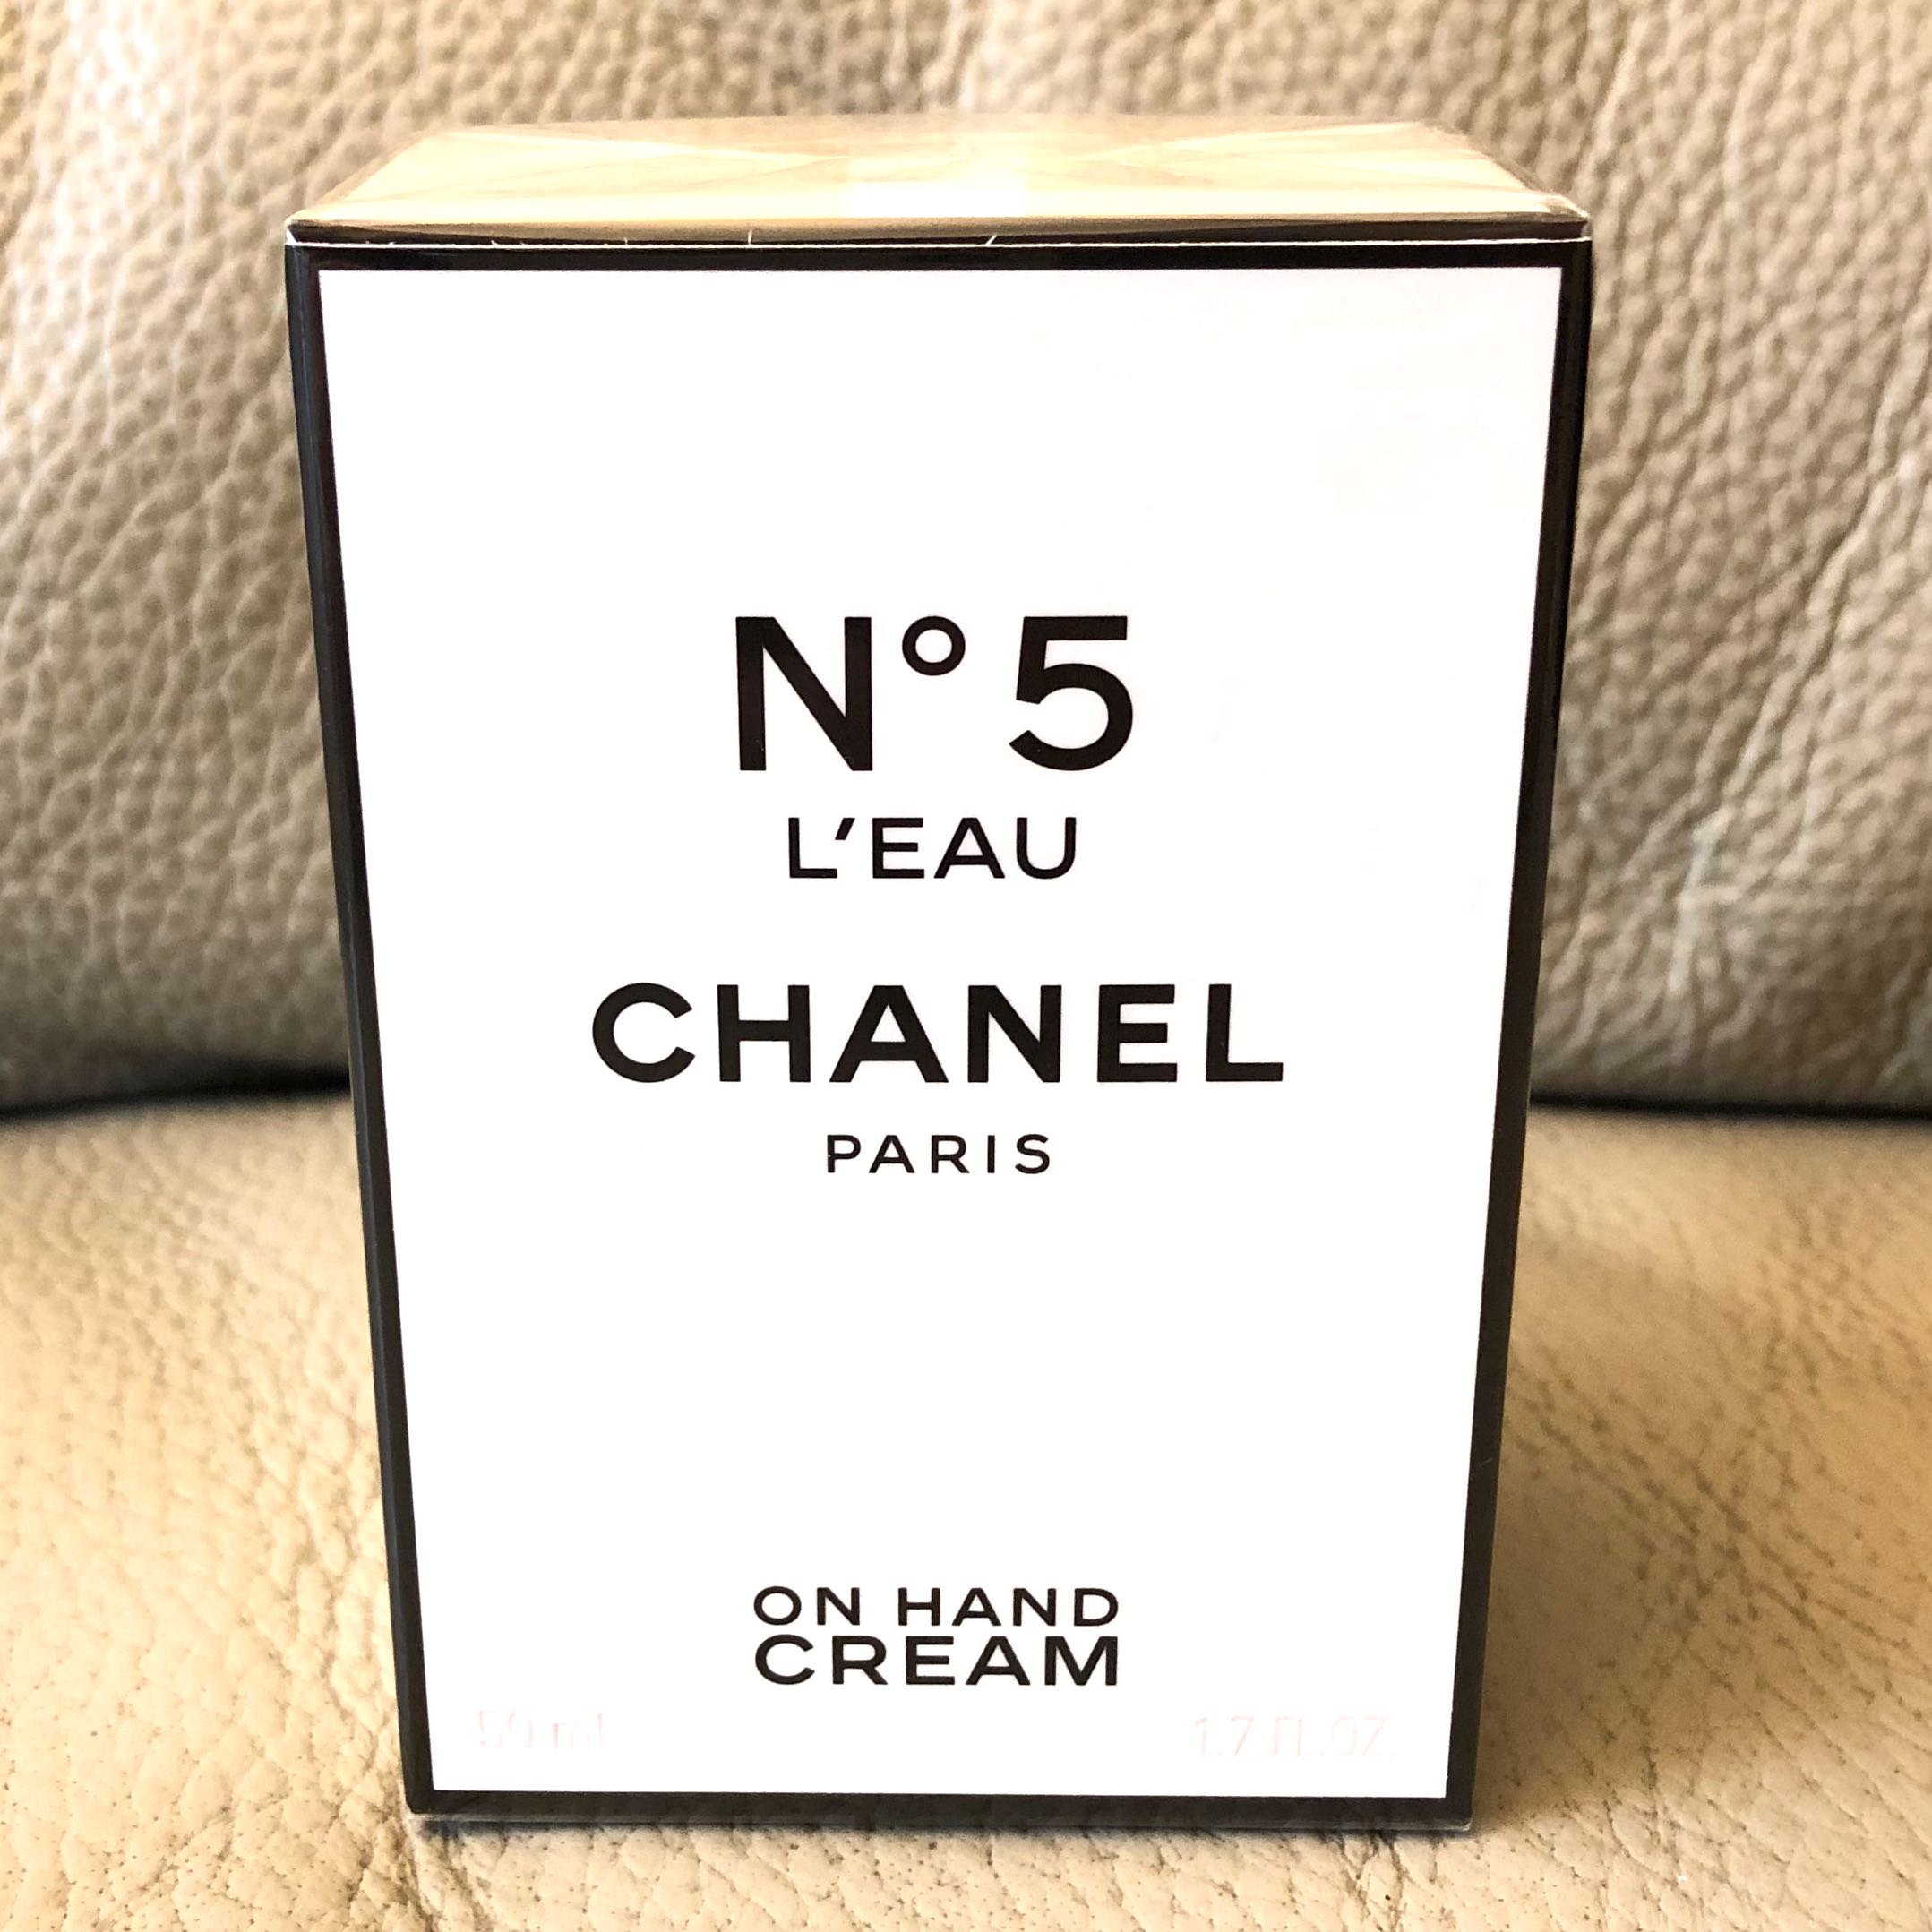 BNIB Chanel No5 L'eau On Hand Cream / Chanel Hand Cream